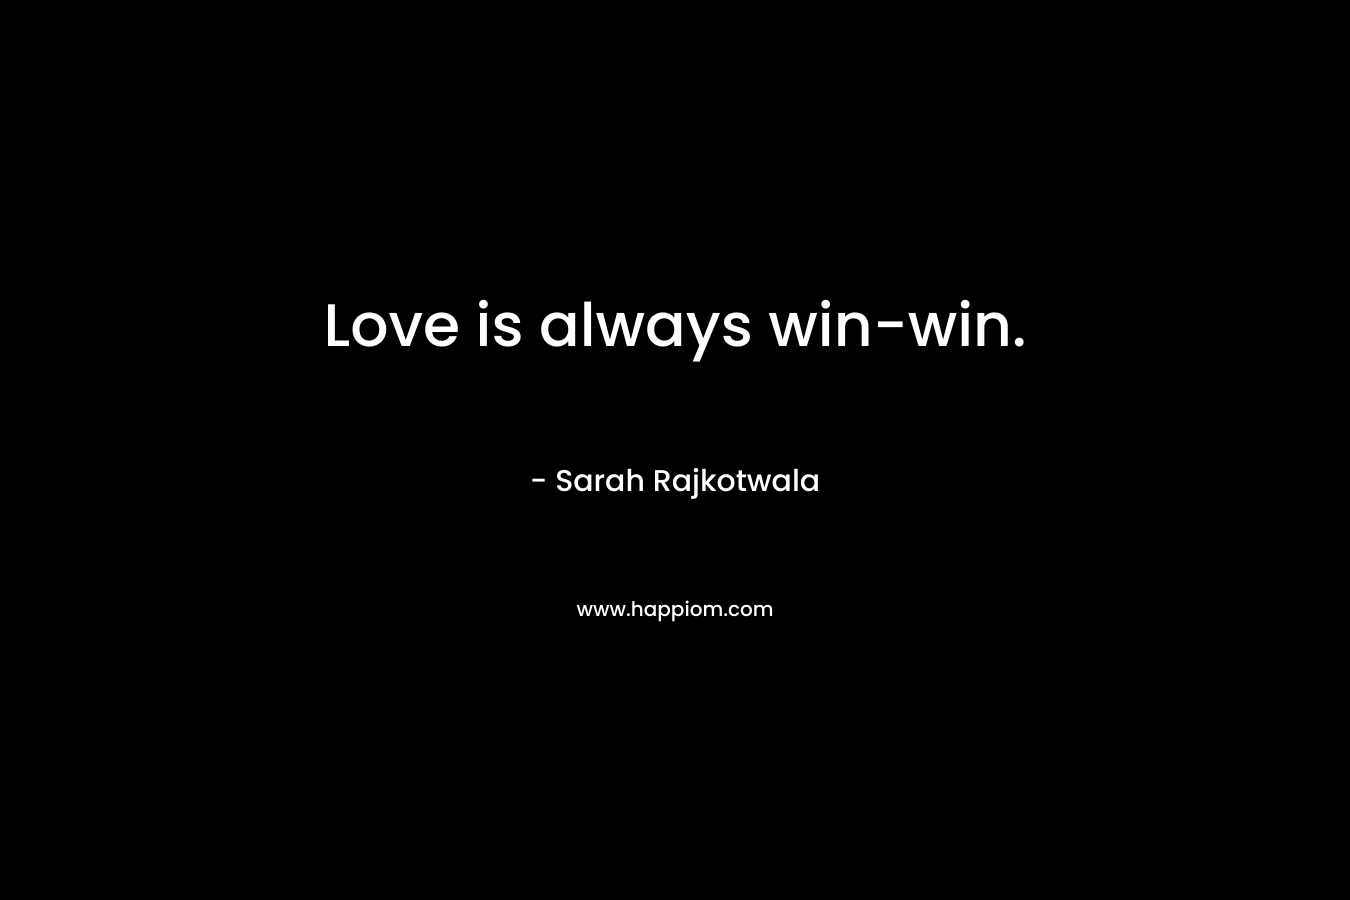 Love is always win-win.